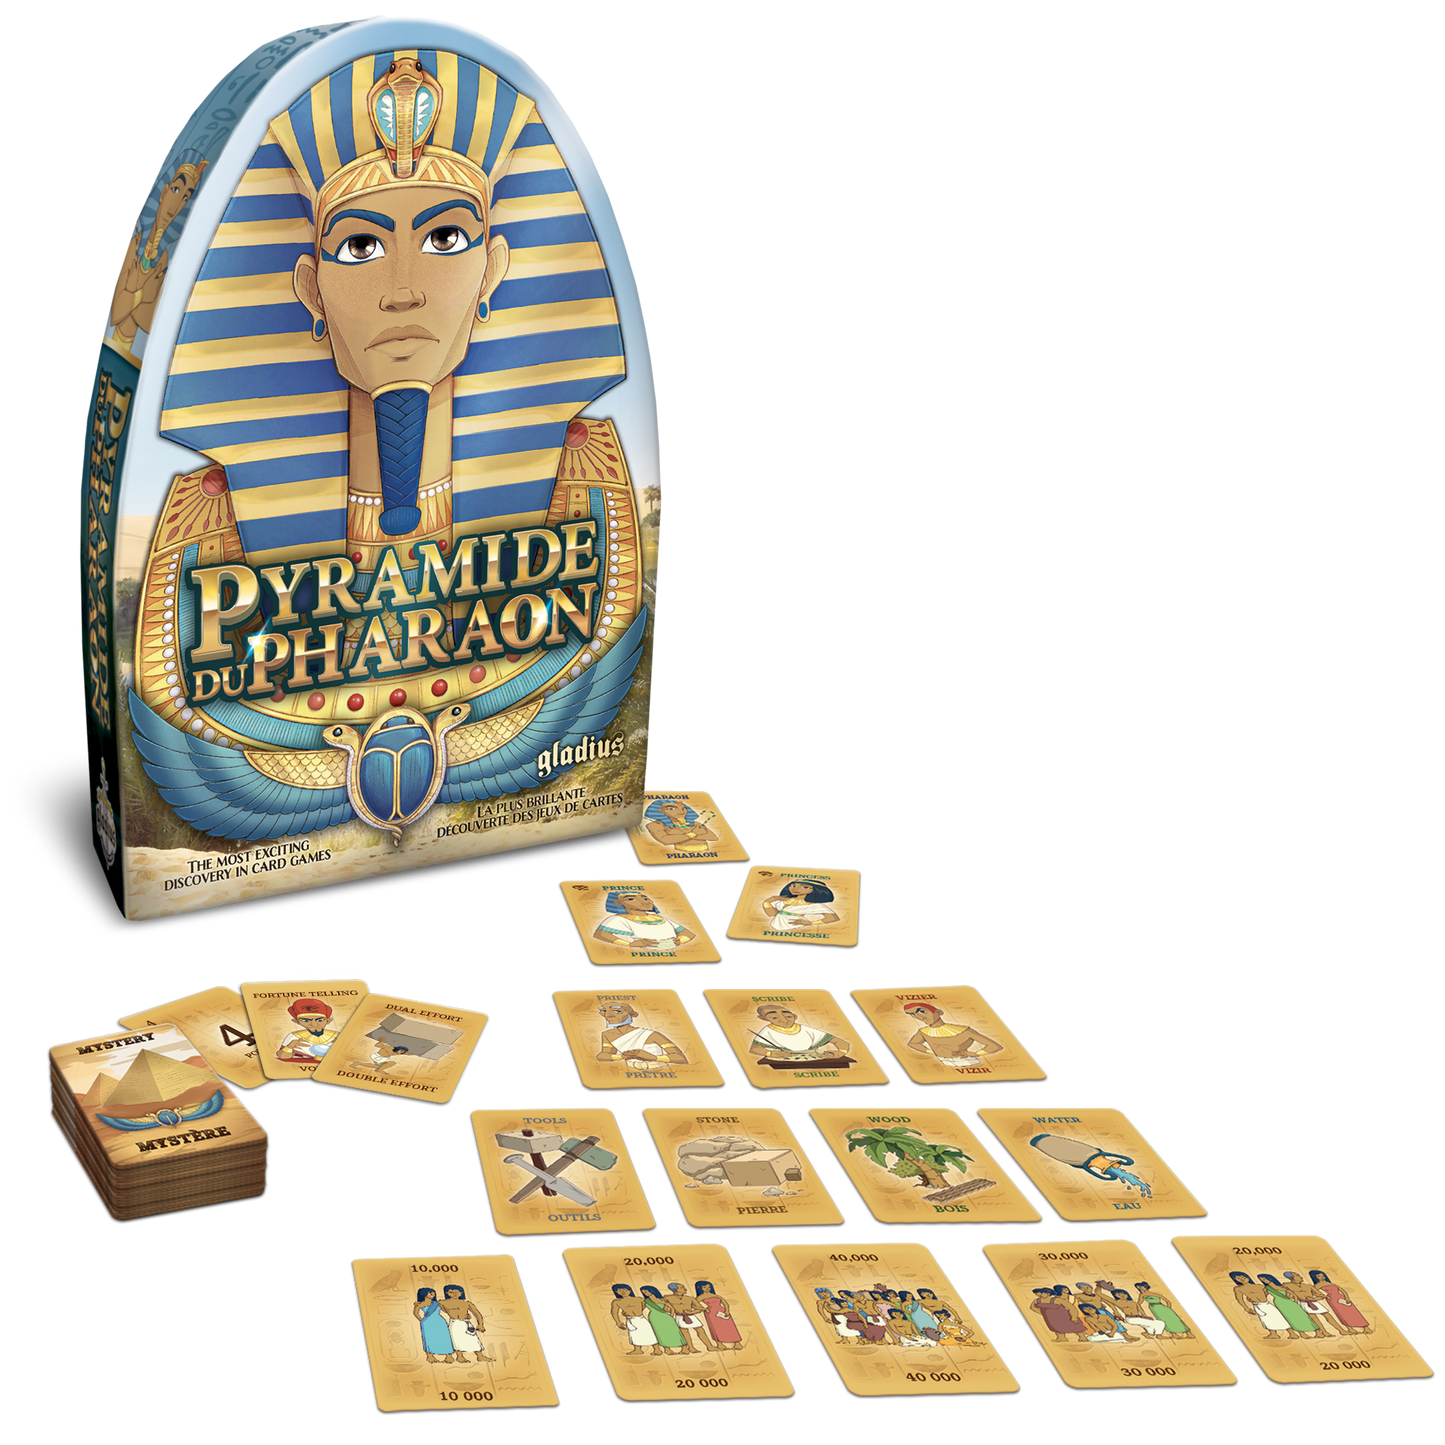 Pharaoh's pyramid game